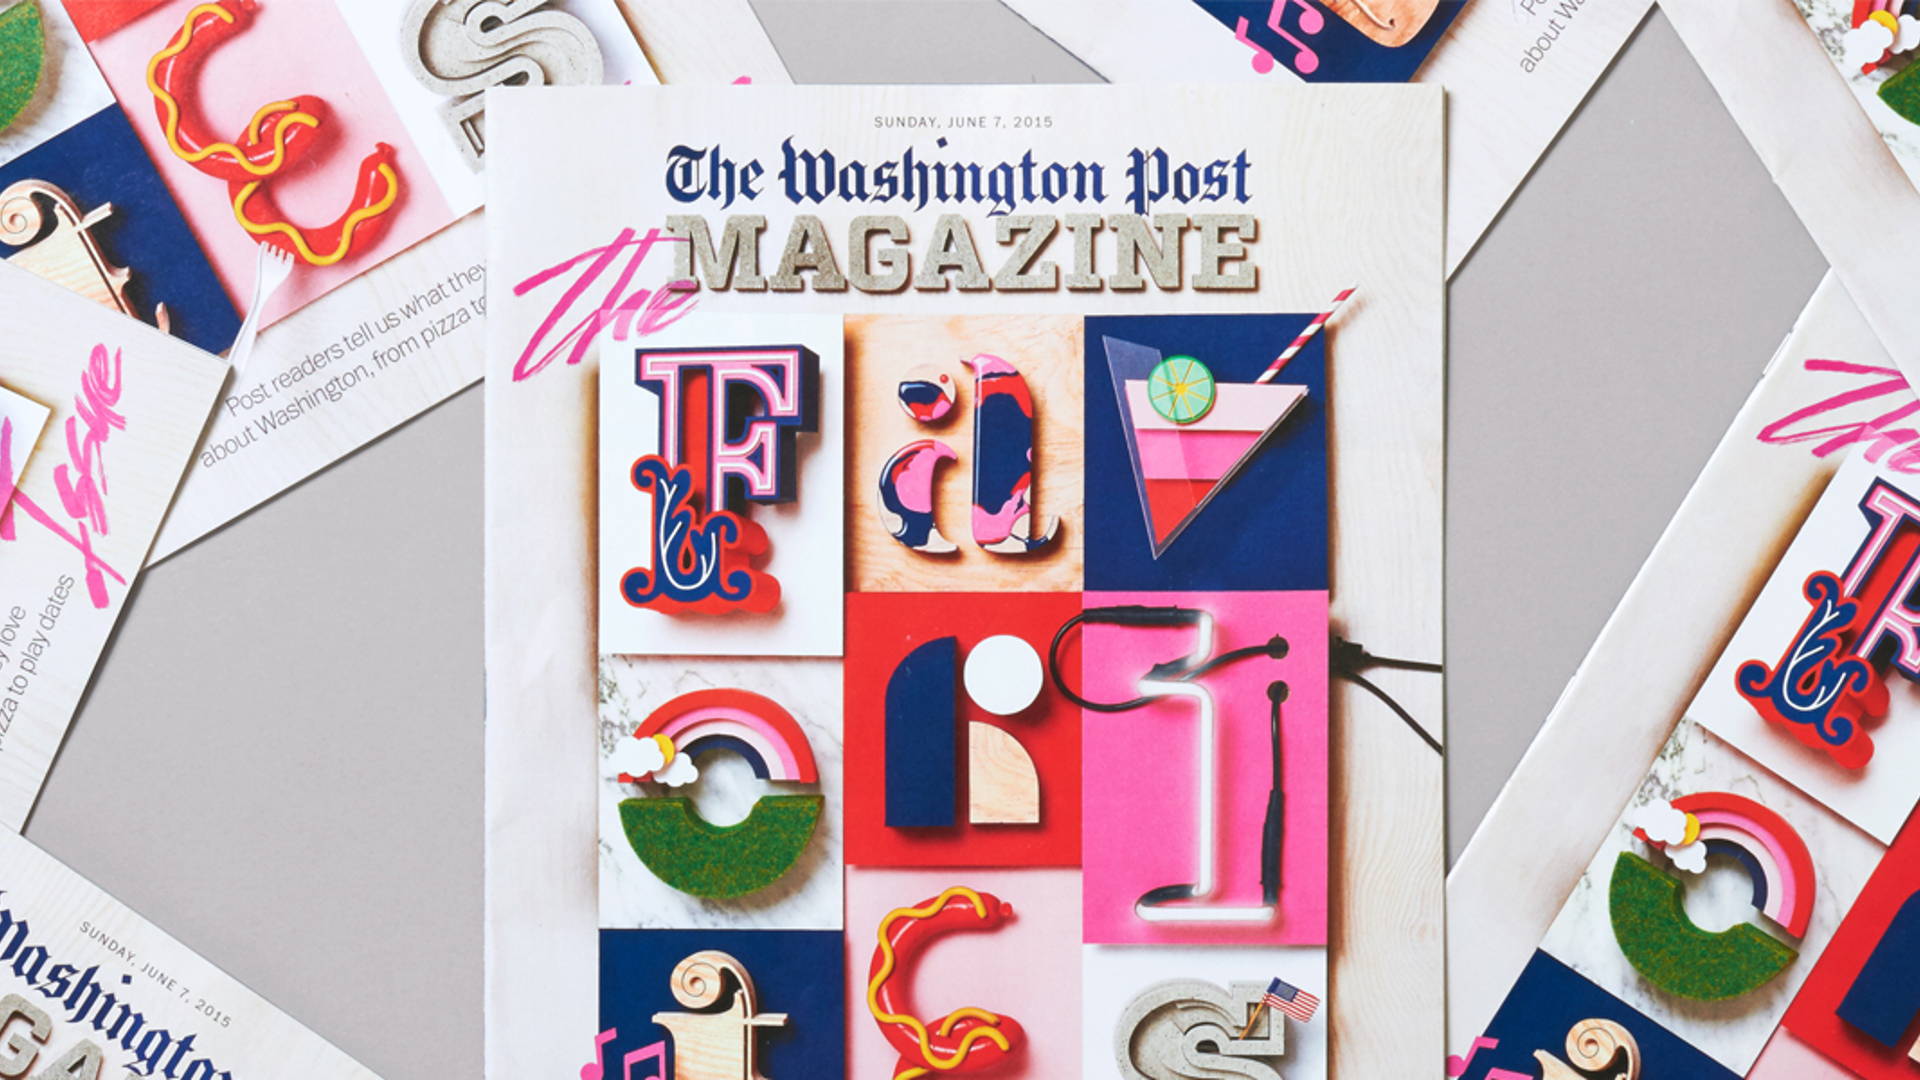 Featured image for The Washington Post "Favorites" Magazine